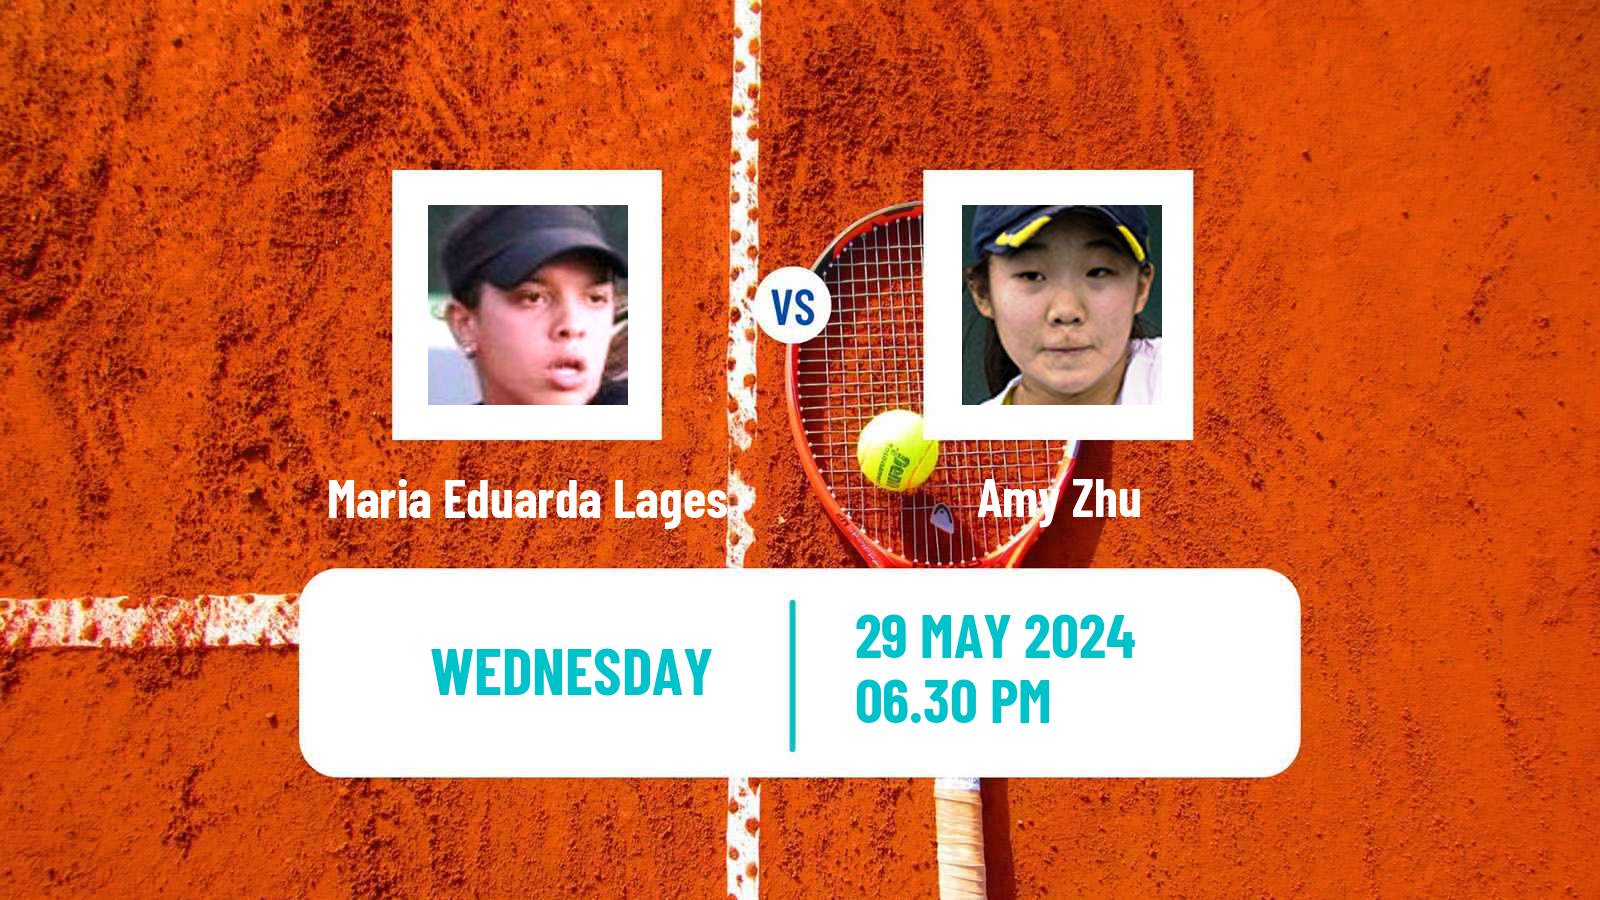 Tennis ITF W15 Rio Claro Women Maria Eduarda Lages - Amy Zhu